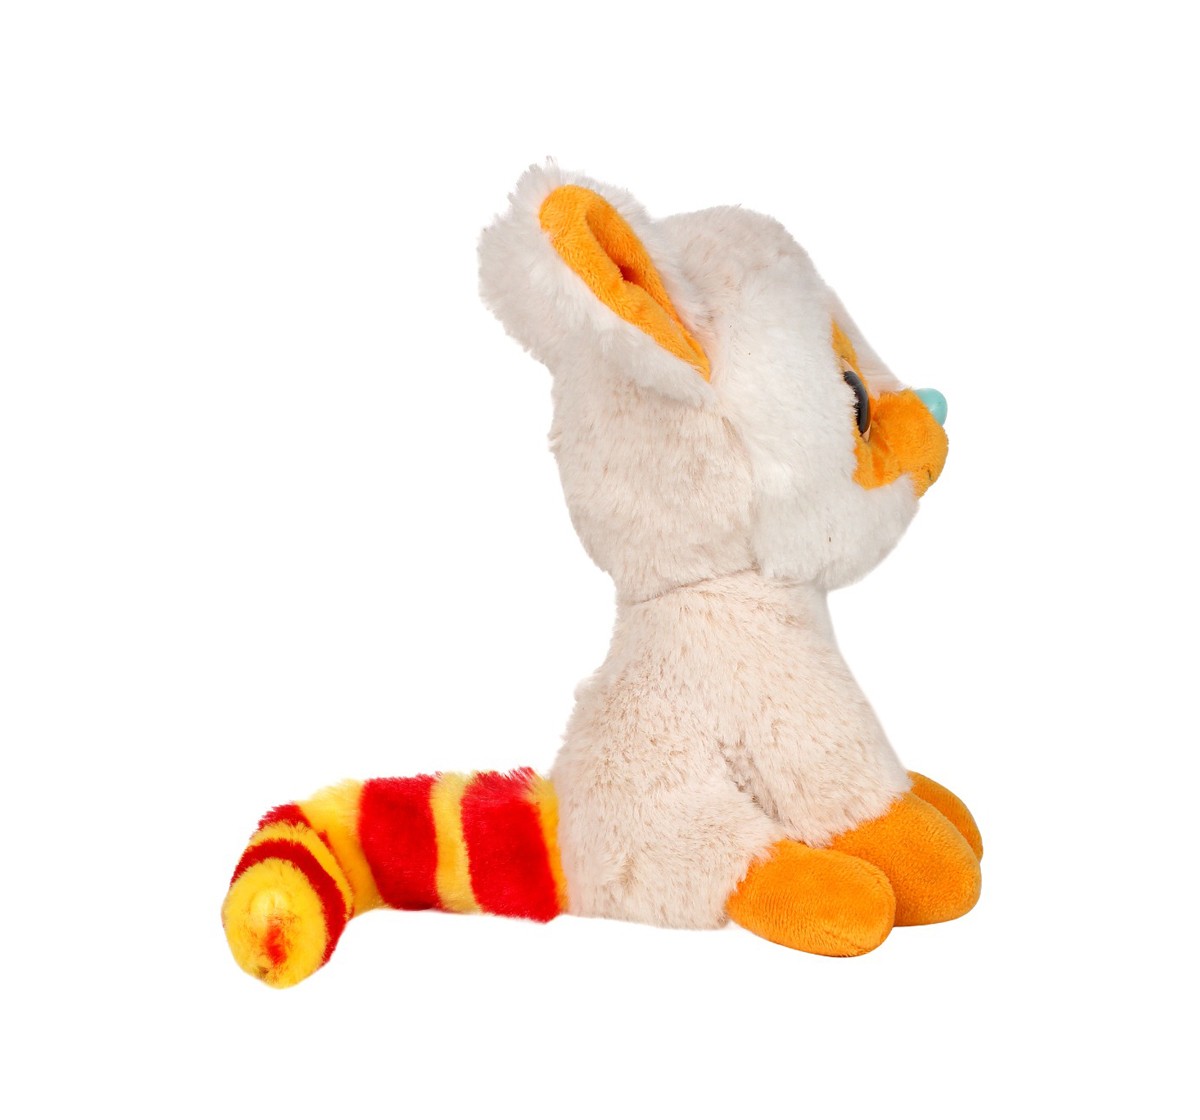 Cuddles Dual Tone Lemur Cat 20 Cms Plush Toy for New Born Kids age 0M+